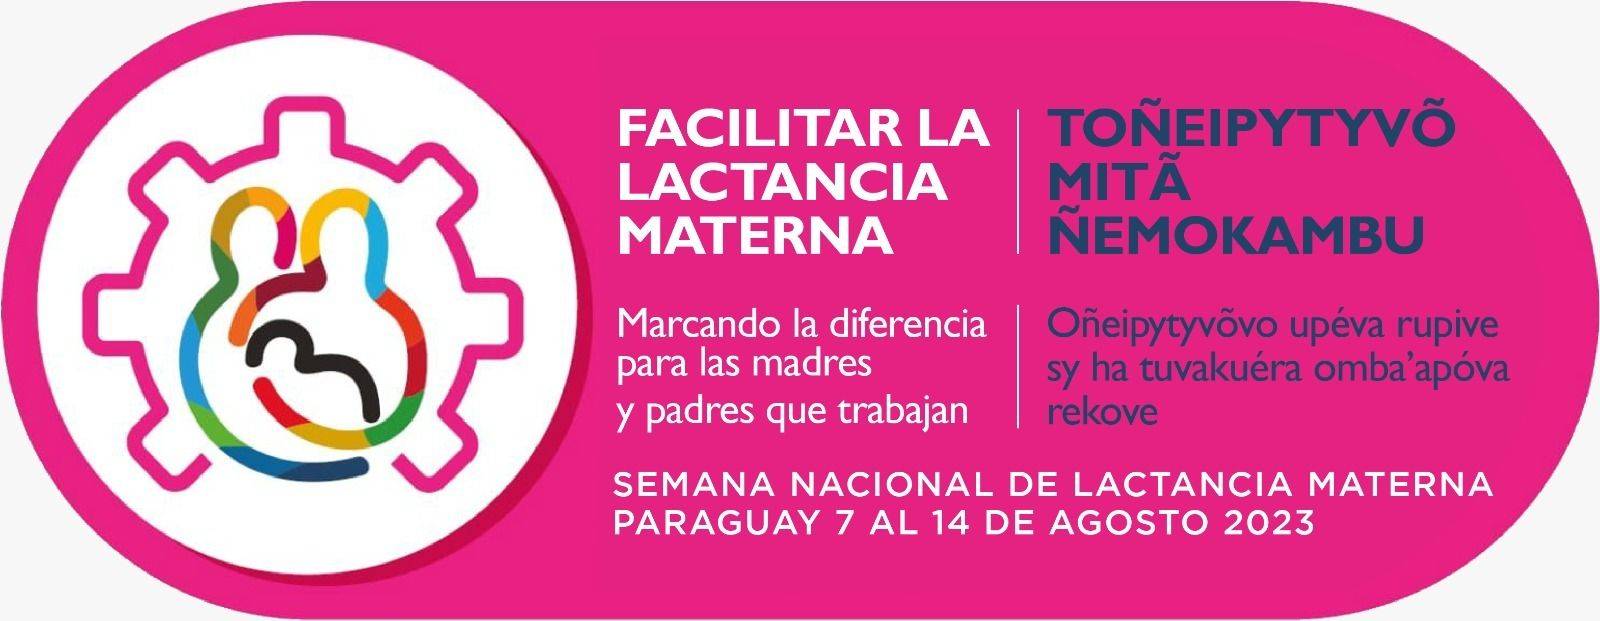 Logo_seminario_lactancia_materna.jpg